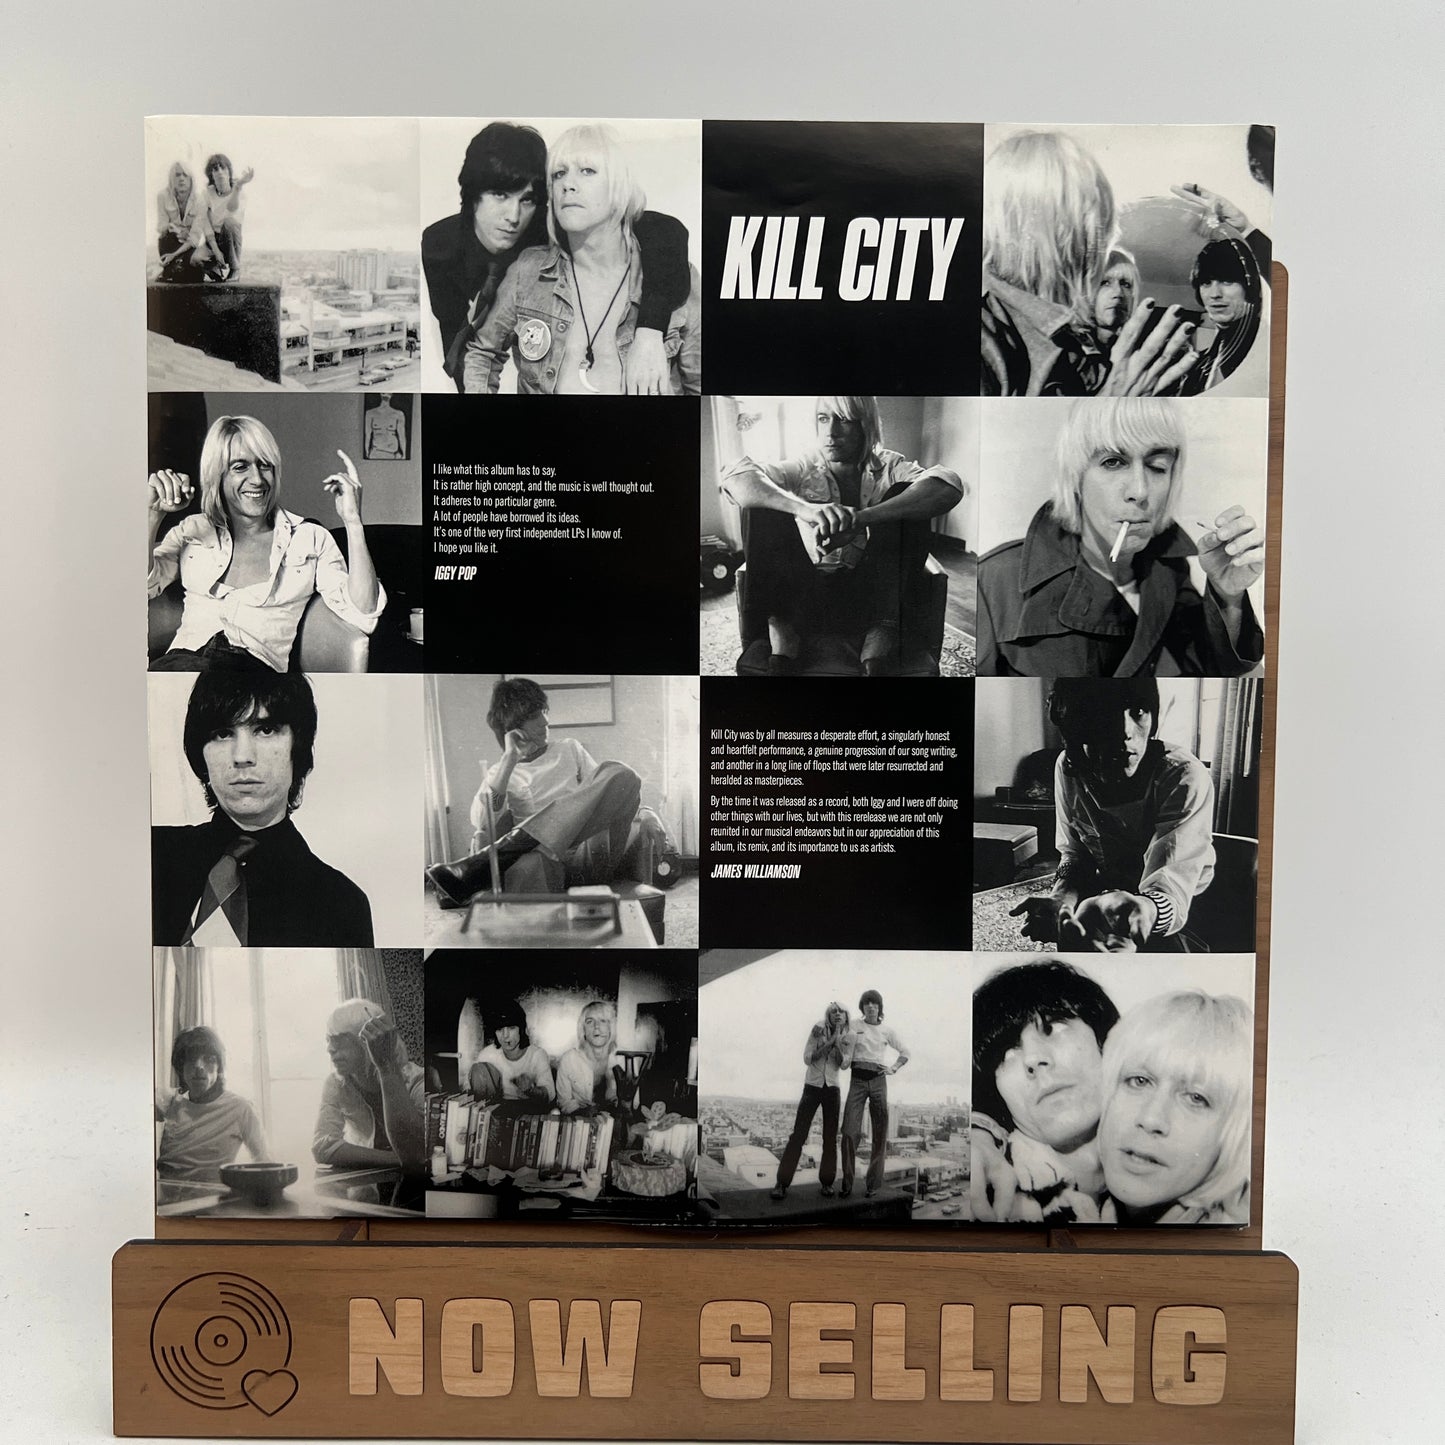 Iggy Pop & James Williamson - Kill City Vinyl LP Purple